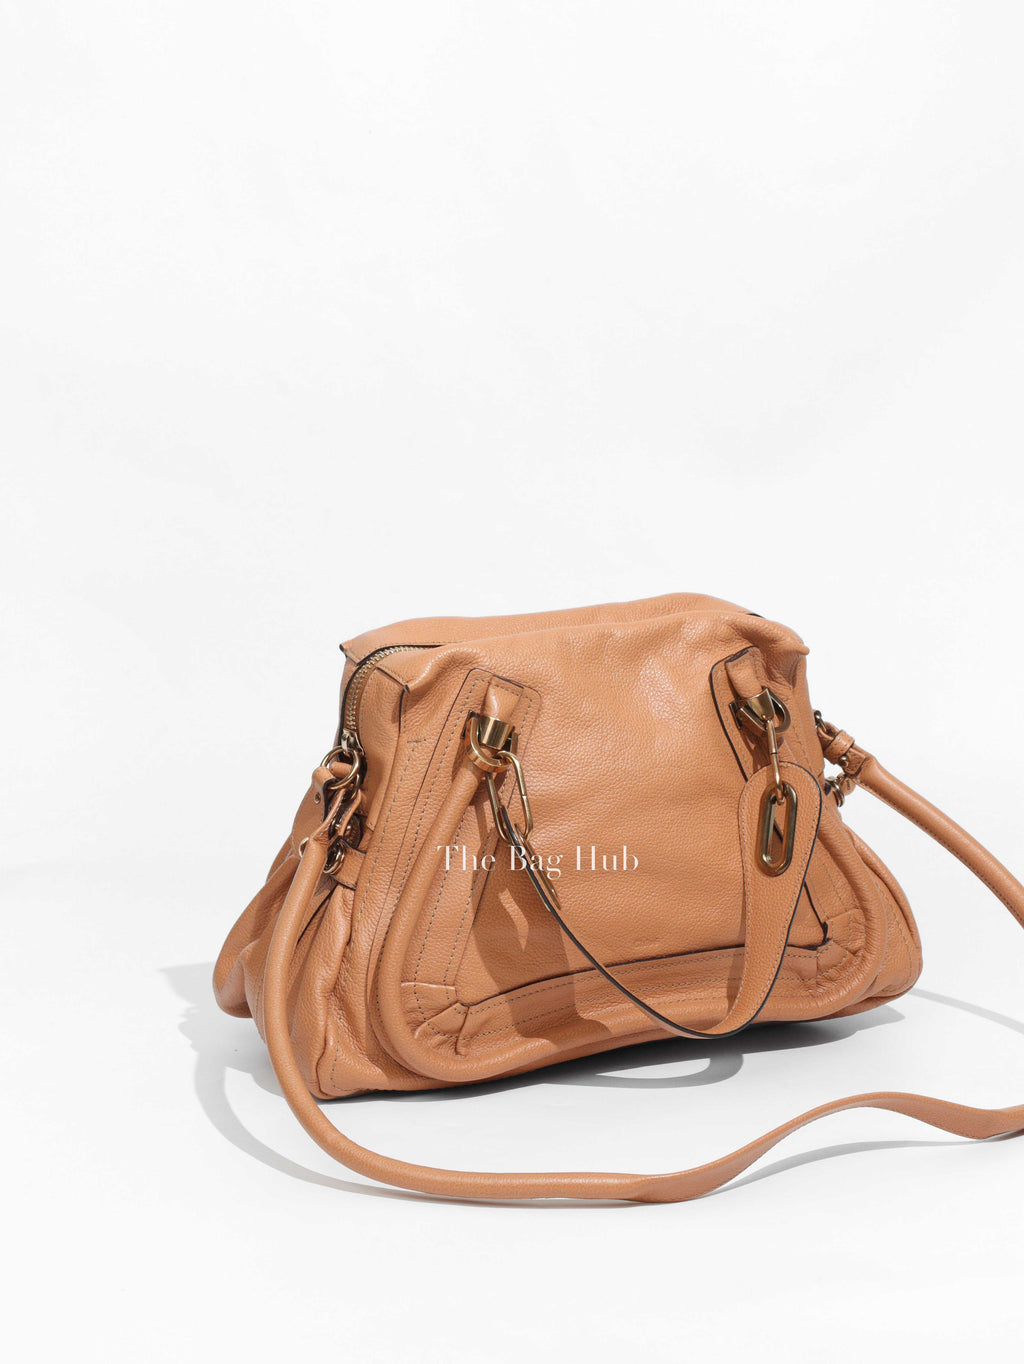 Chloè Light Tan Leather Medium Paraty Bag